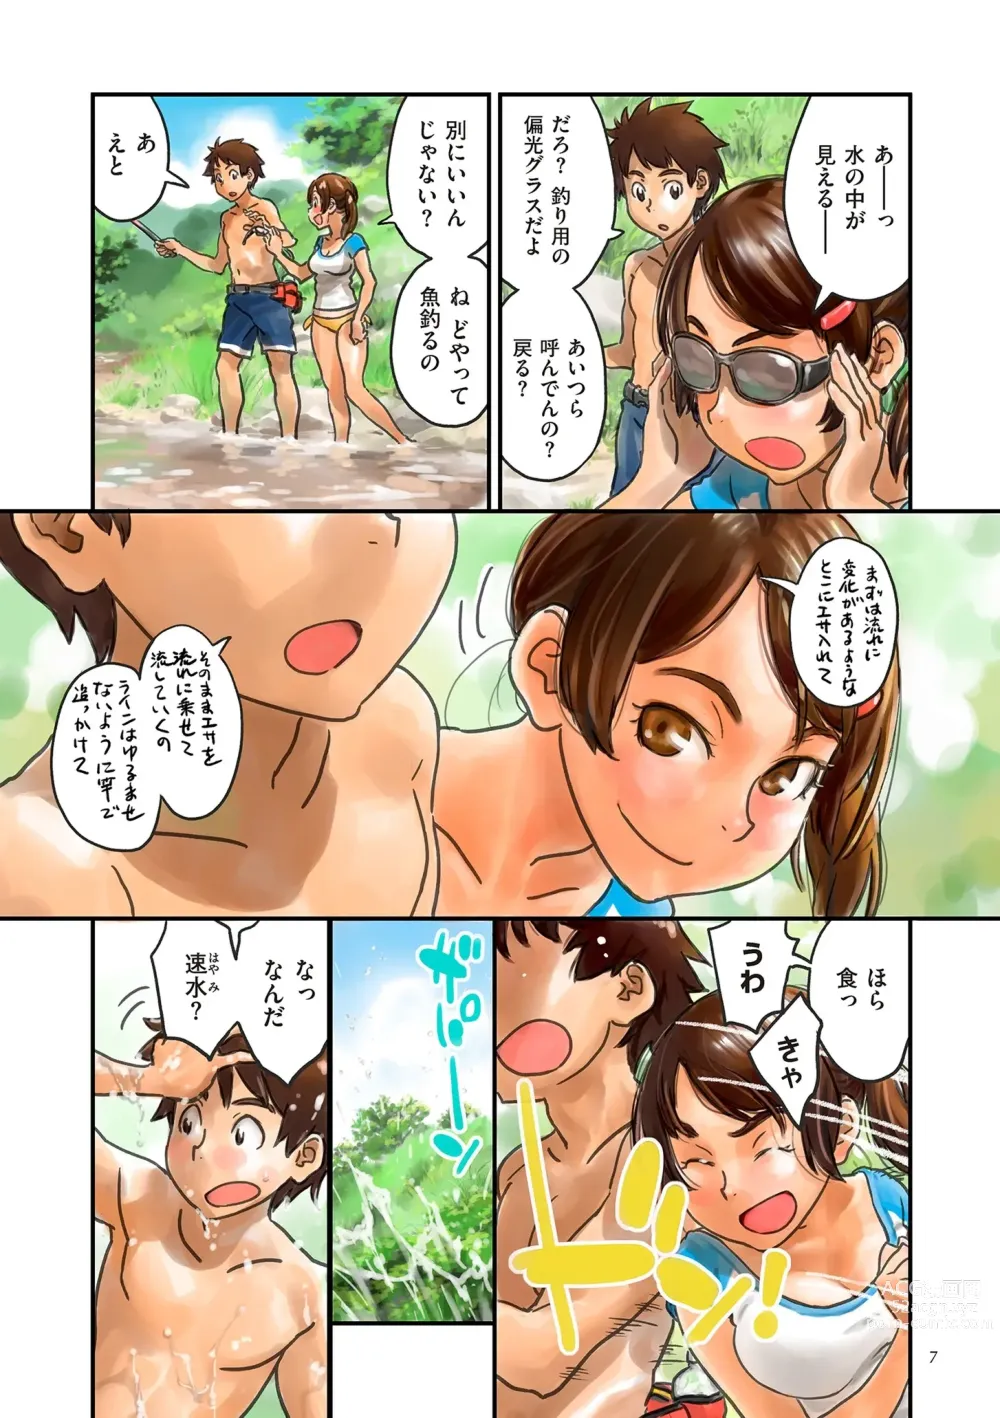 Page 7 of manga Fujicolor